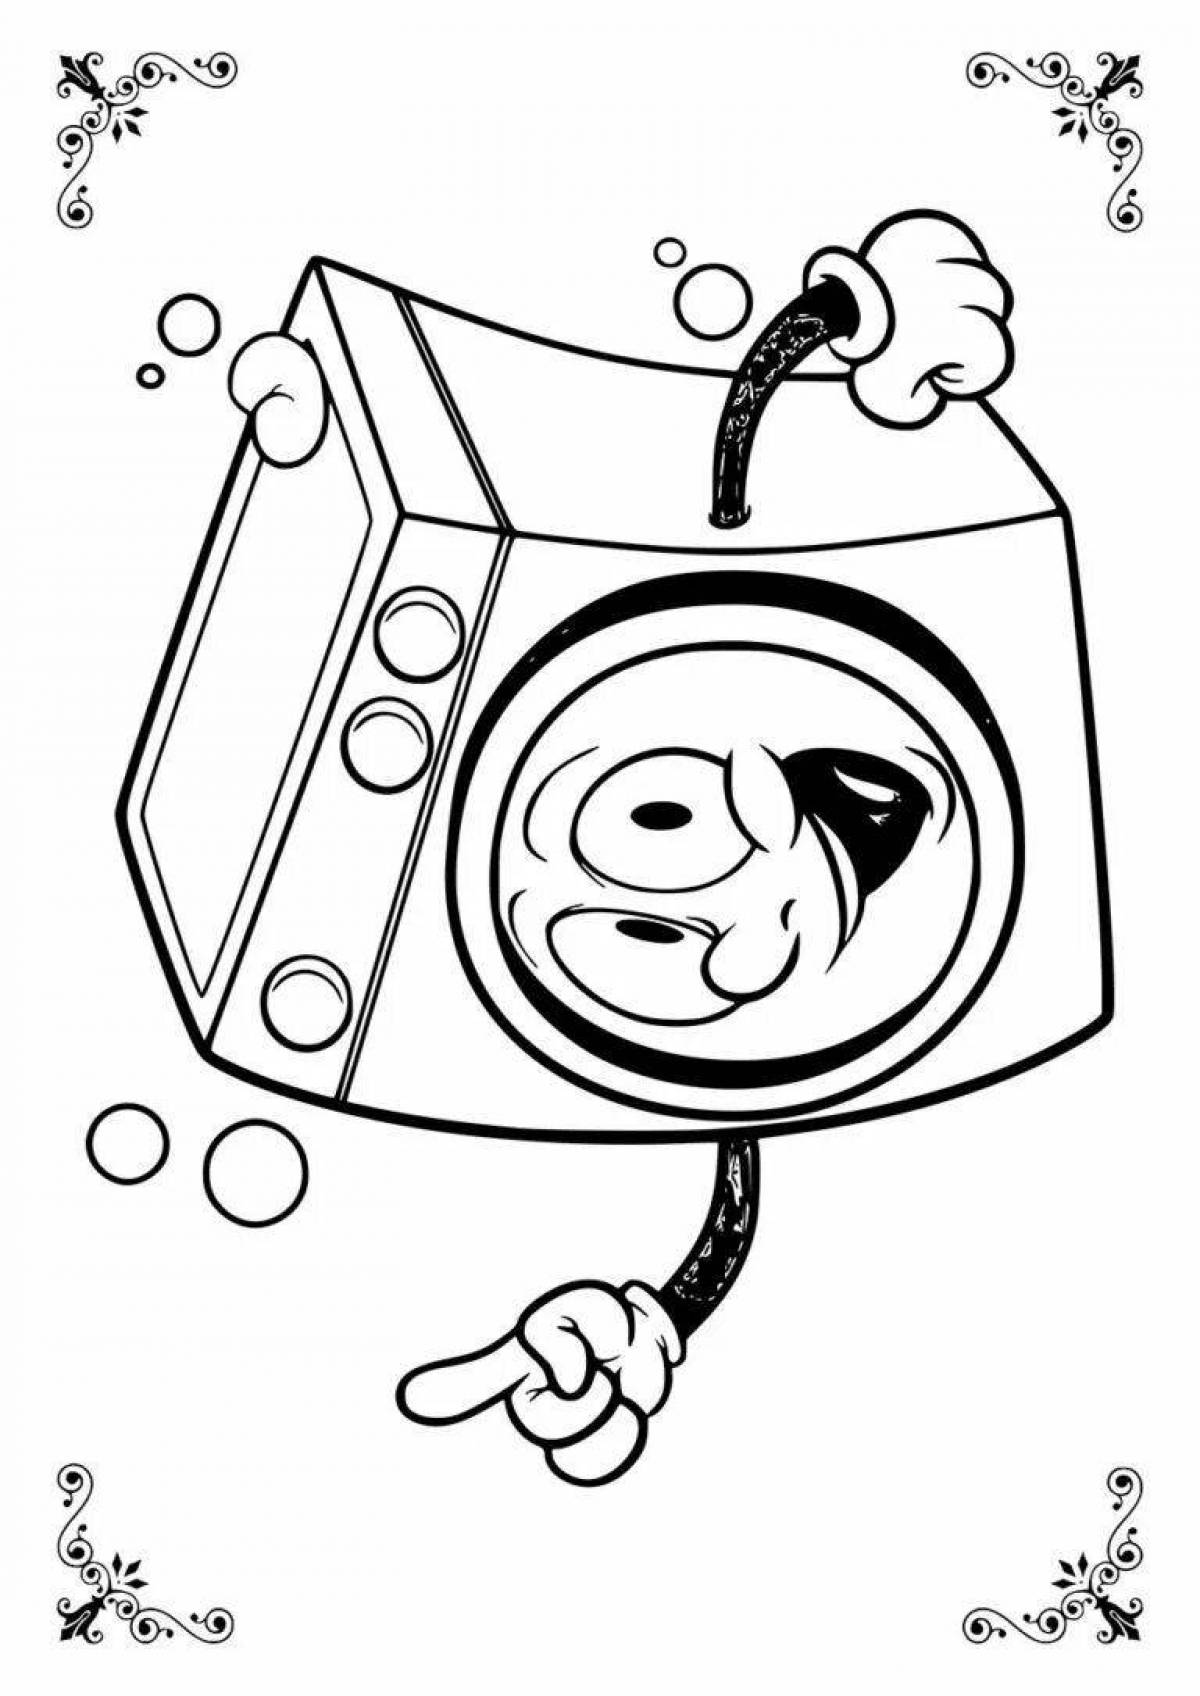 Fun coloring of the washing machine